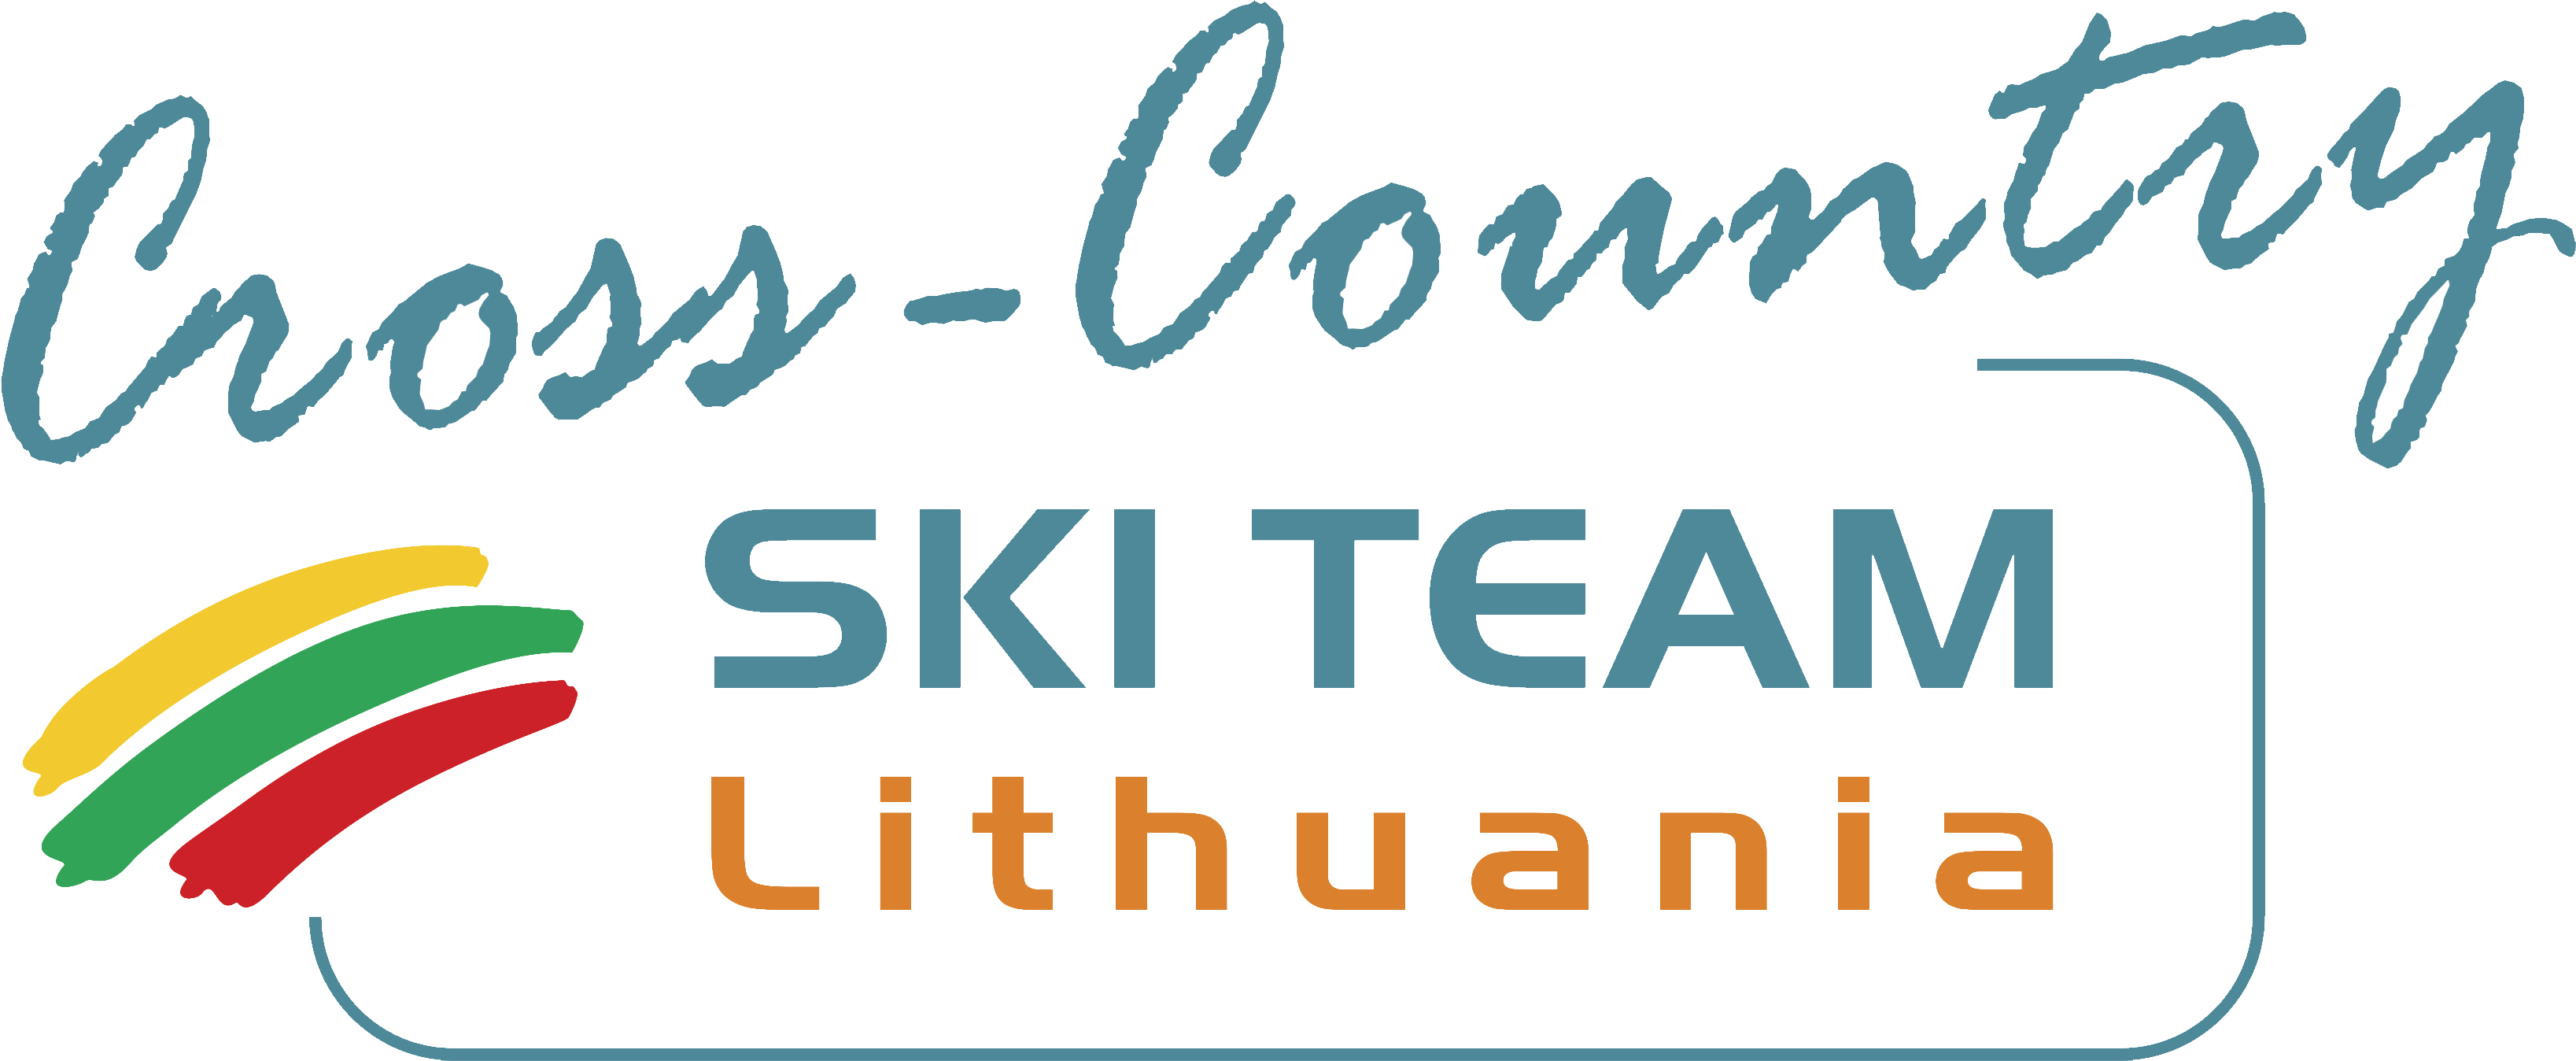 Cross-Country_ski-team